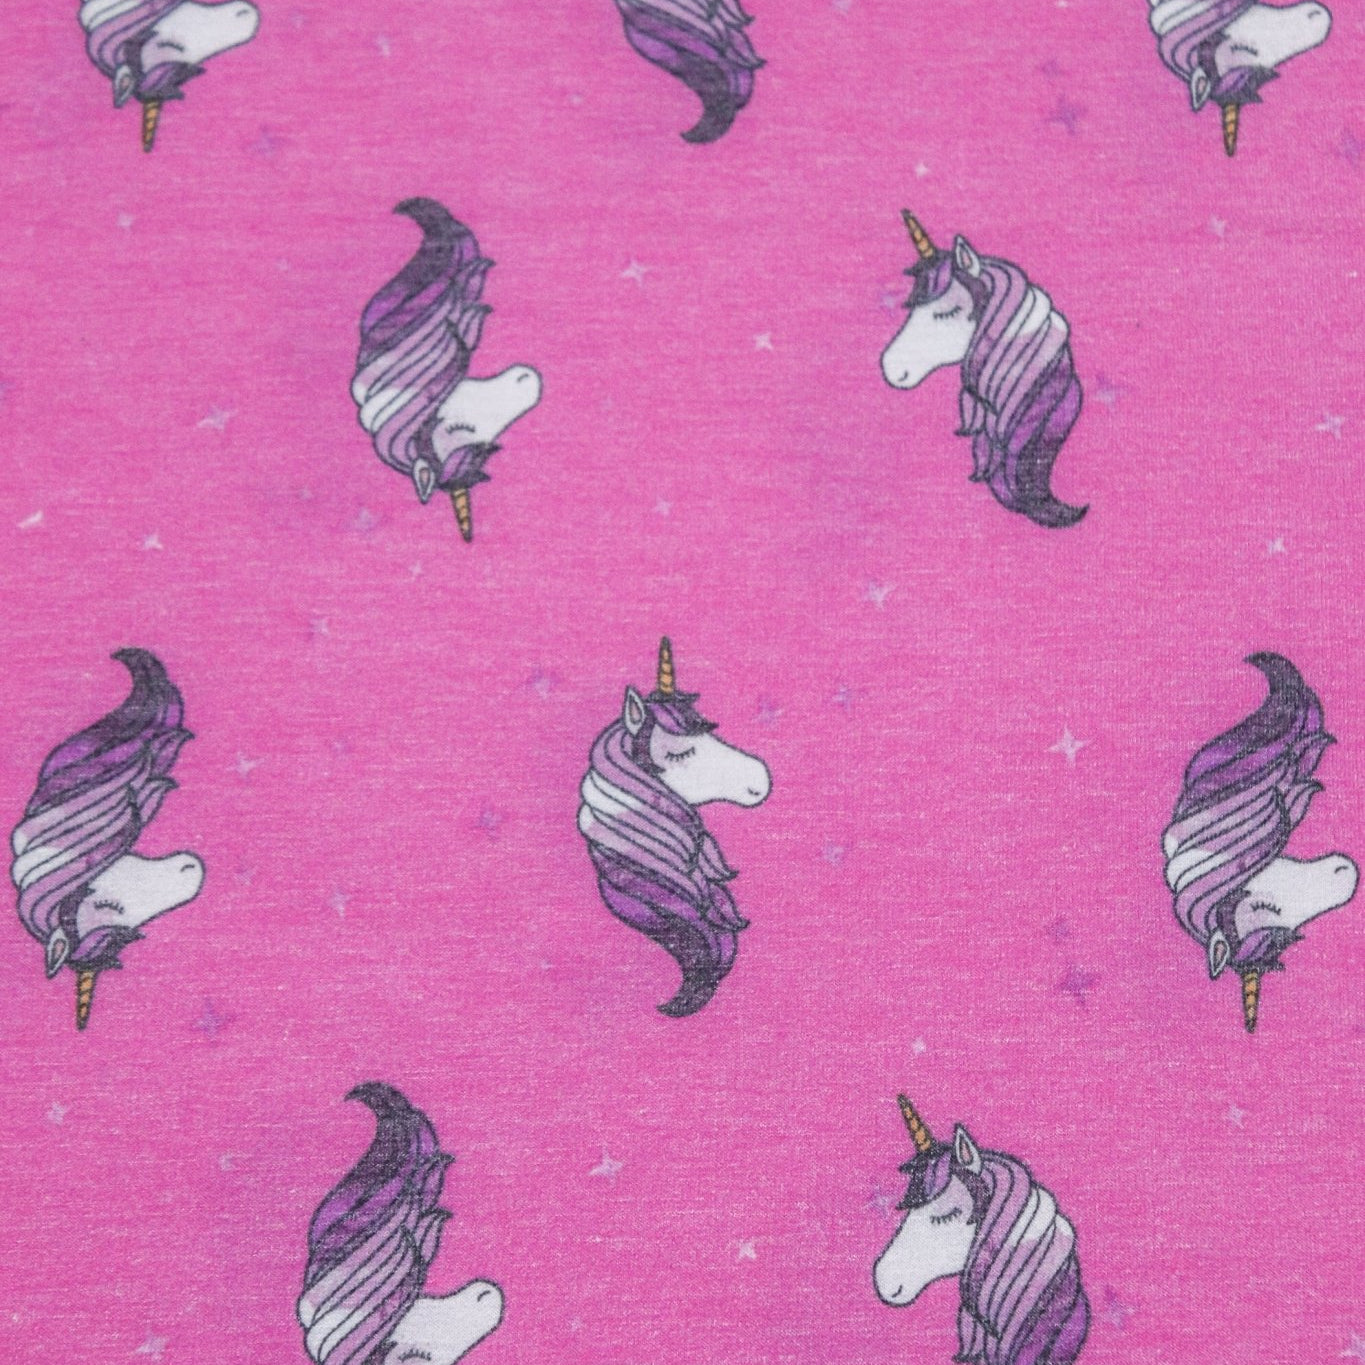 Purple Unicorns on Pink, French Terry Knit Print FTP-325-PNK - Boho Fabrics